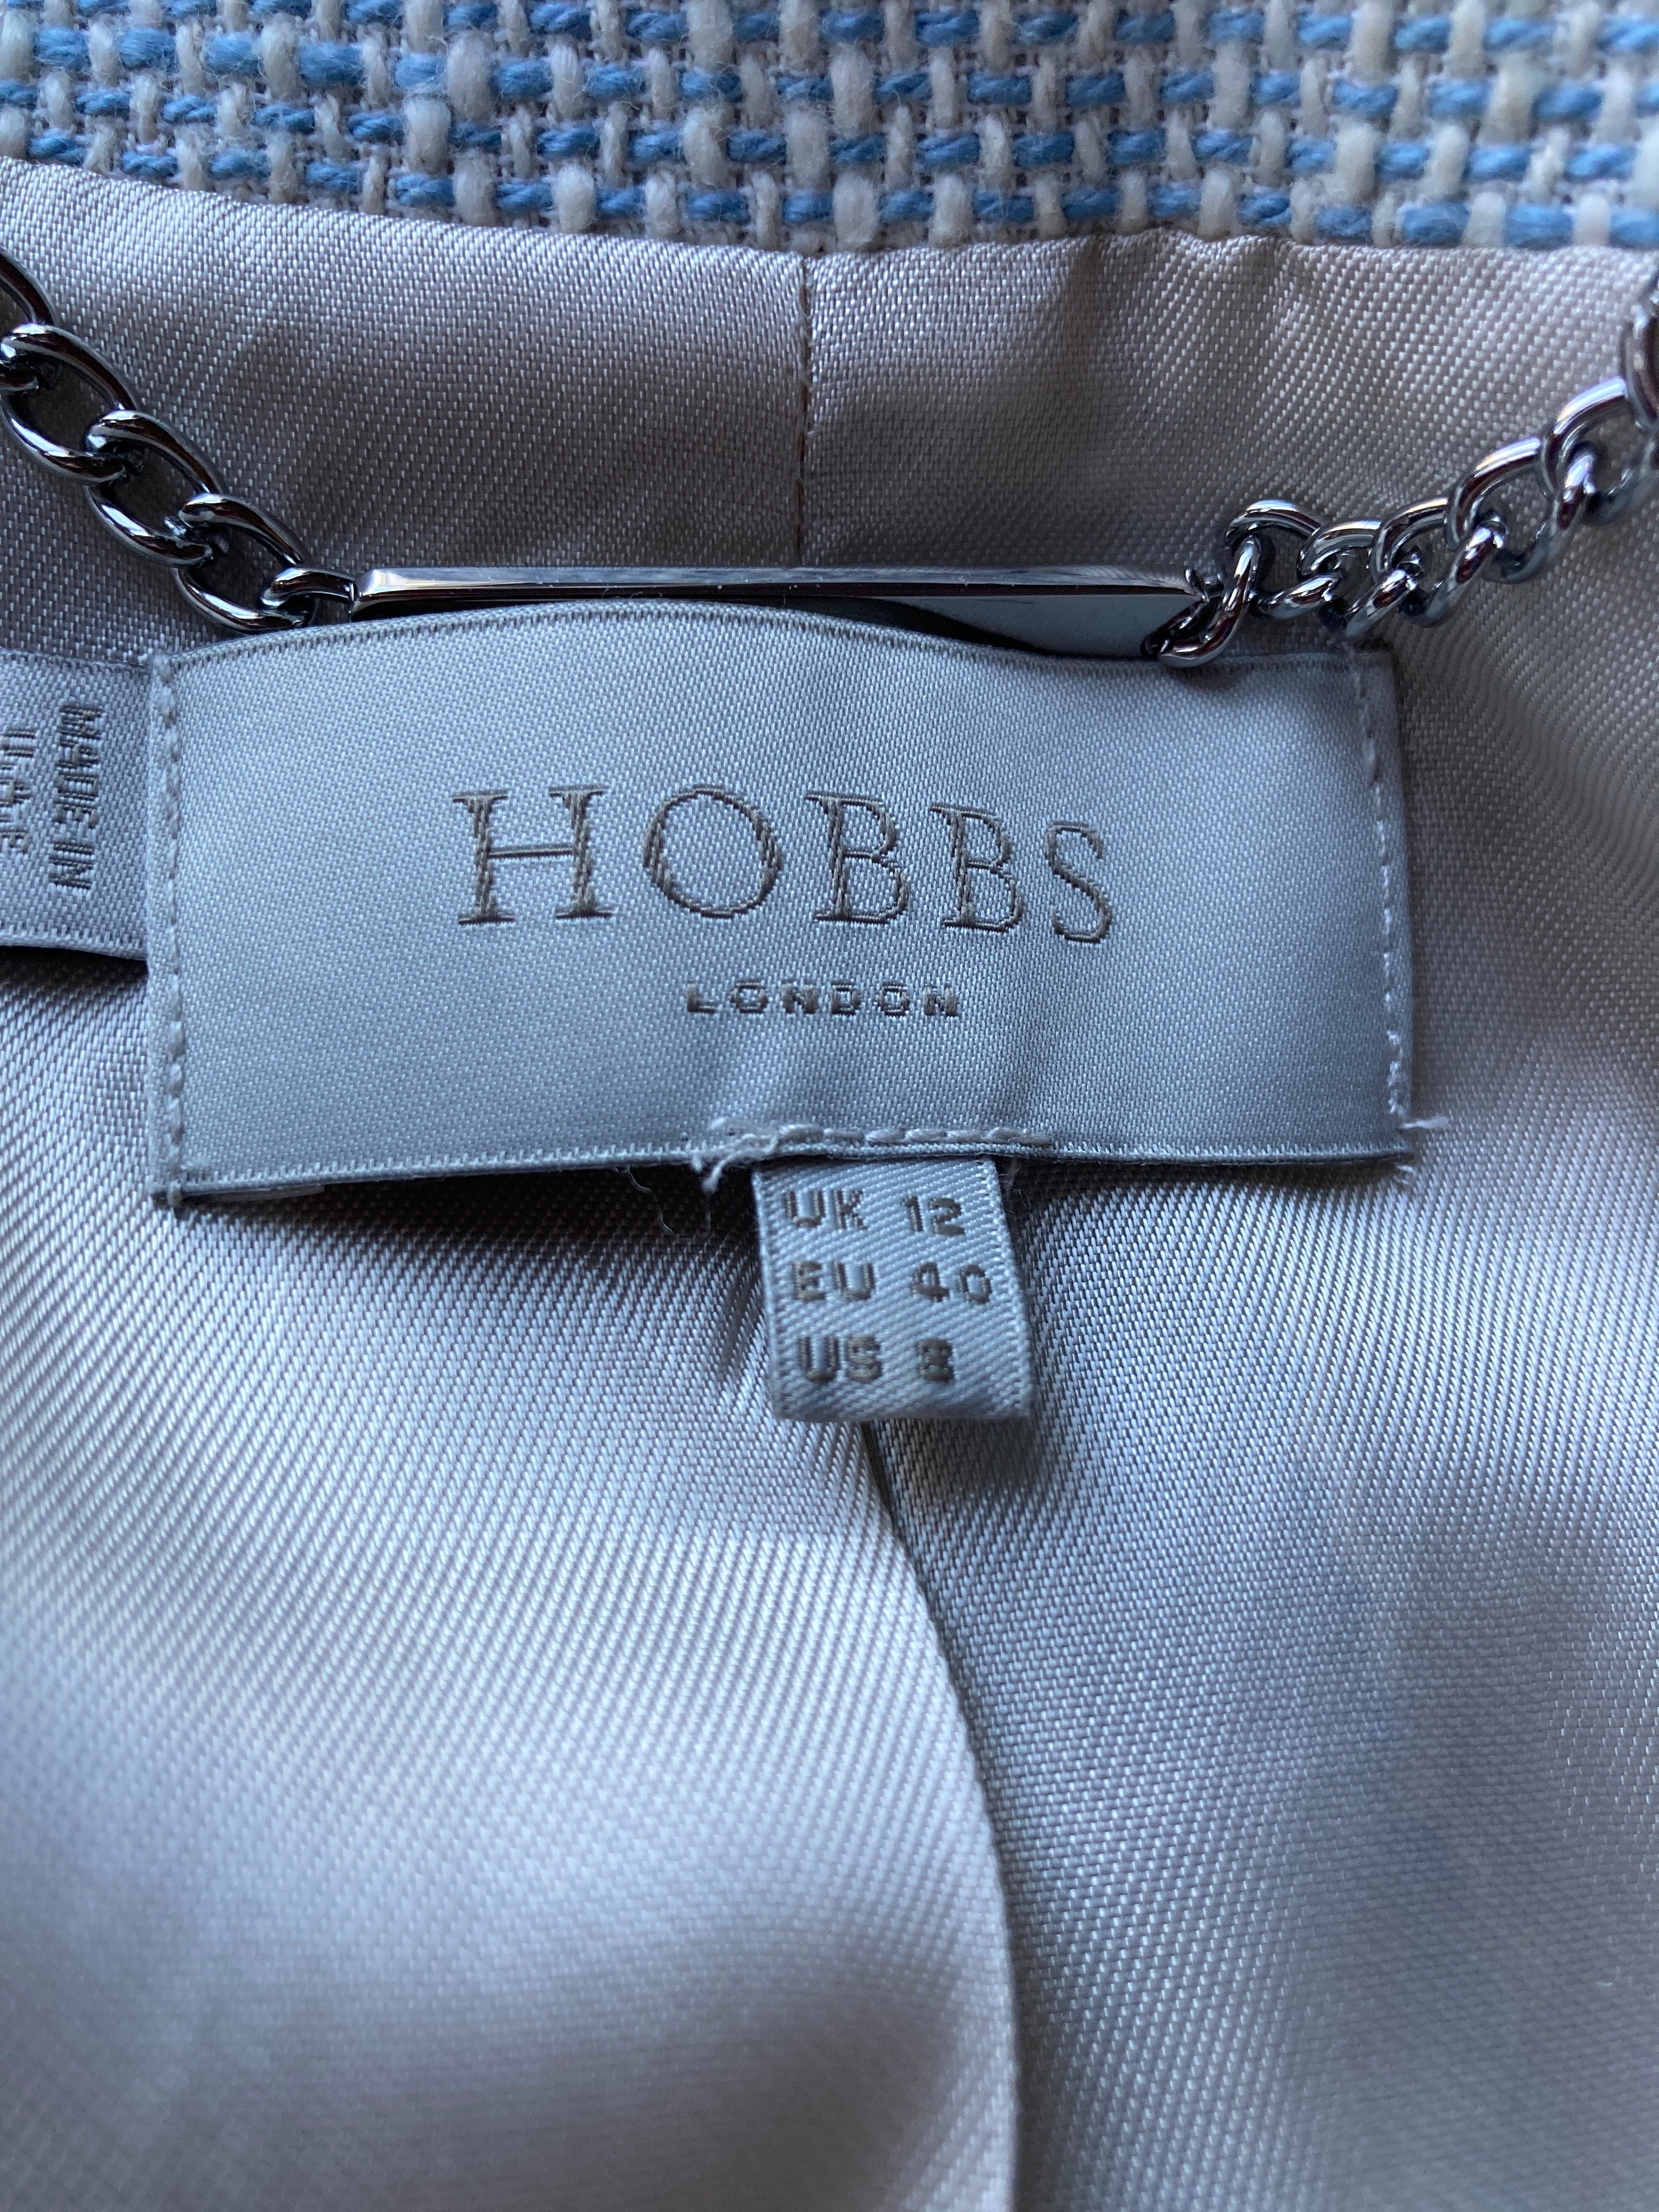 Hobbs London Light Blue Cotton Tweed Dress and Suit Jacket, 8